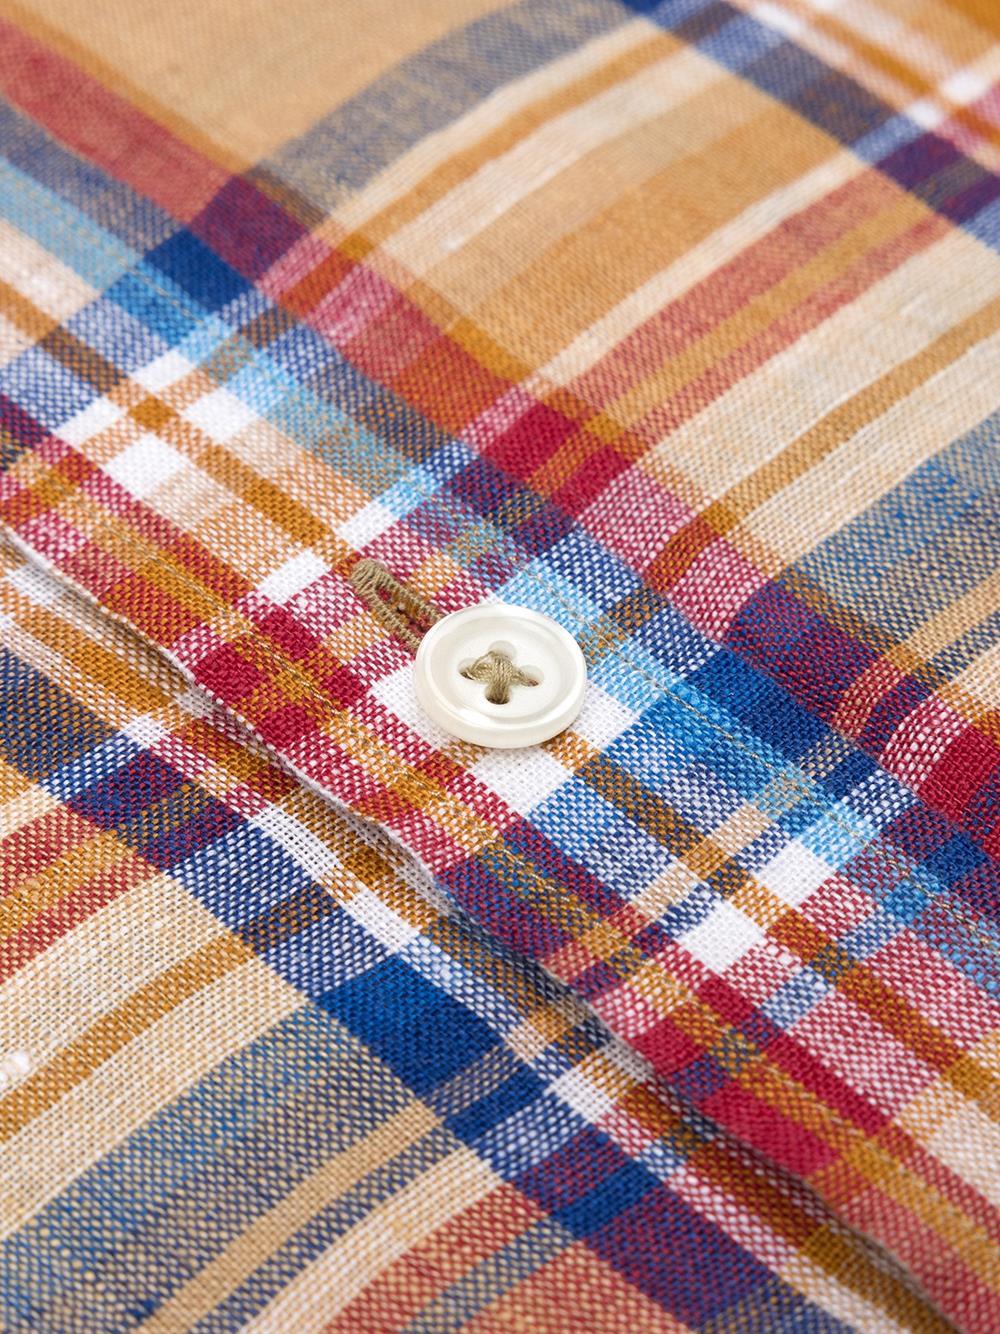 Phil shirt in sandy linen with tartan pattern